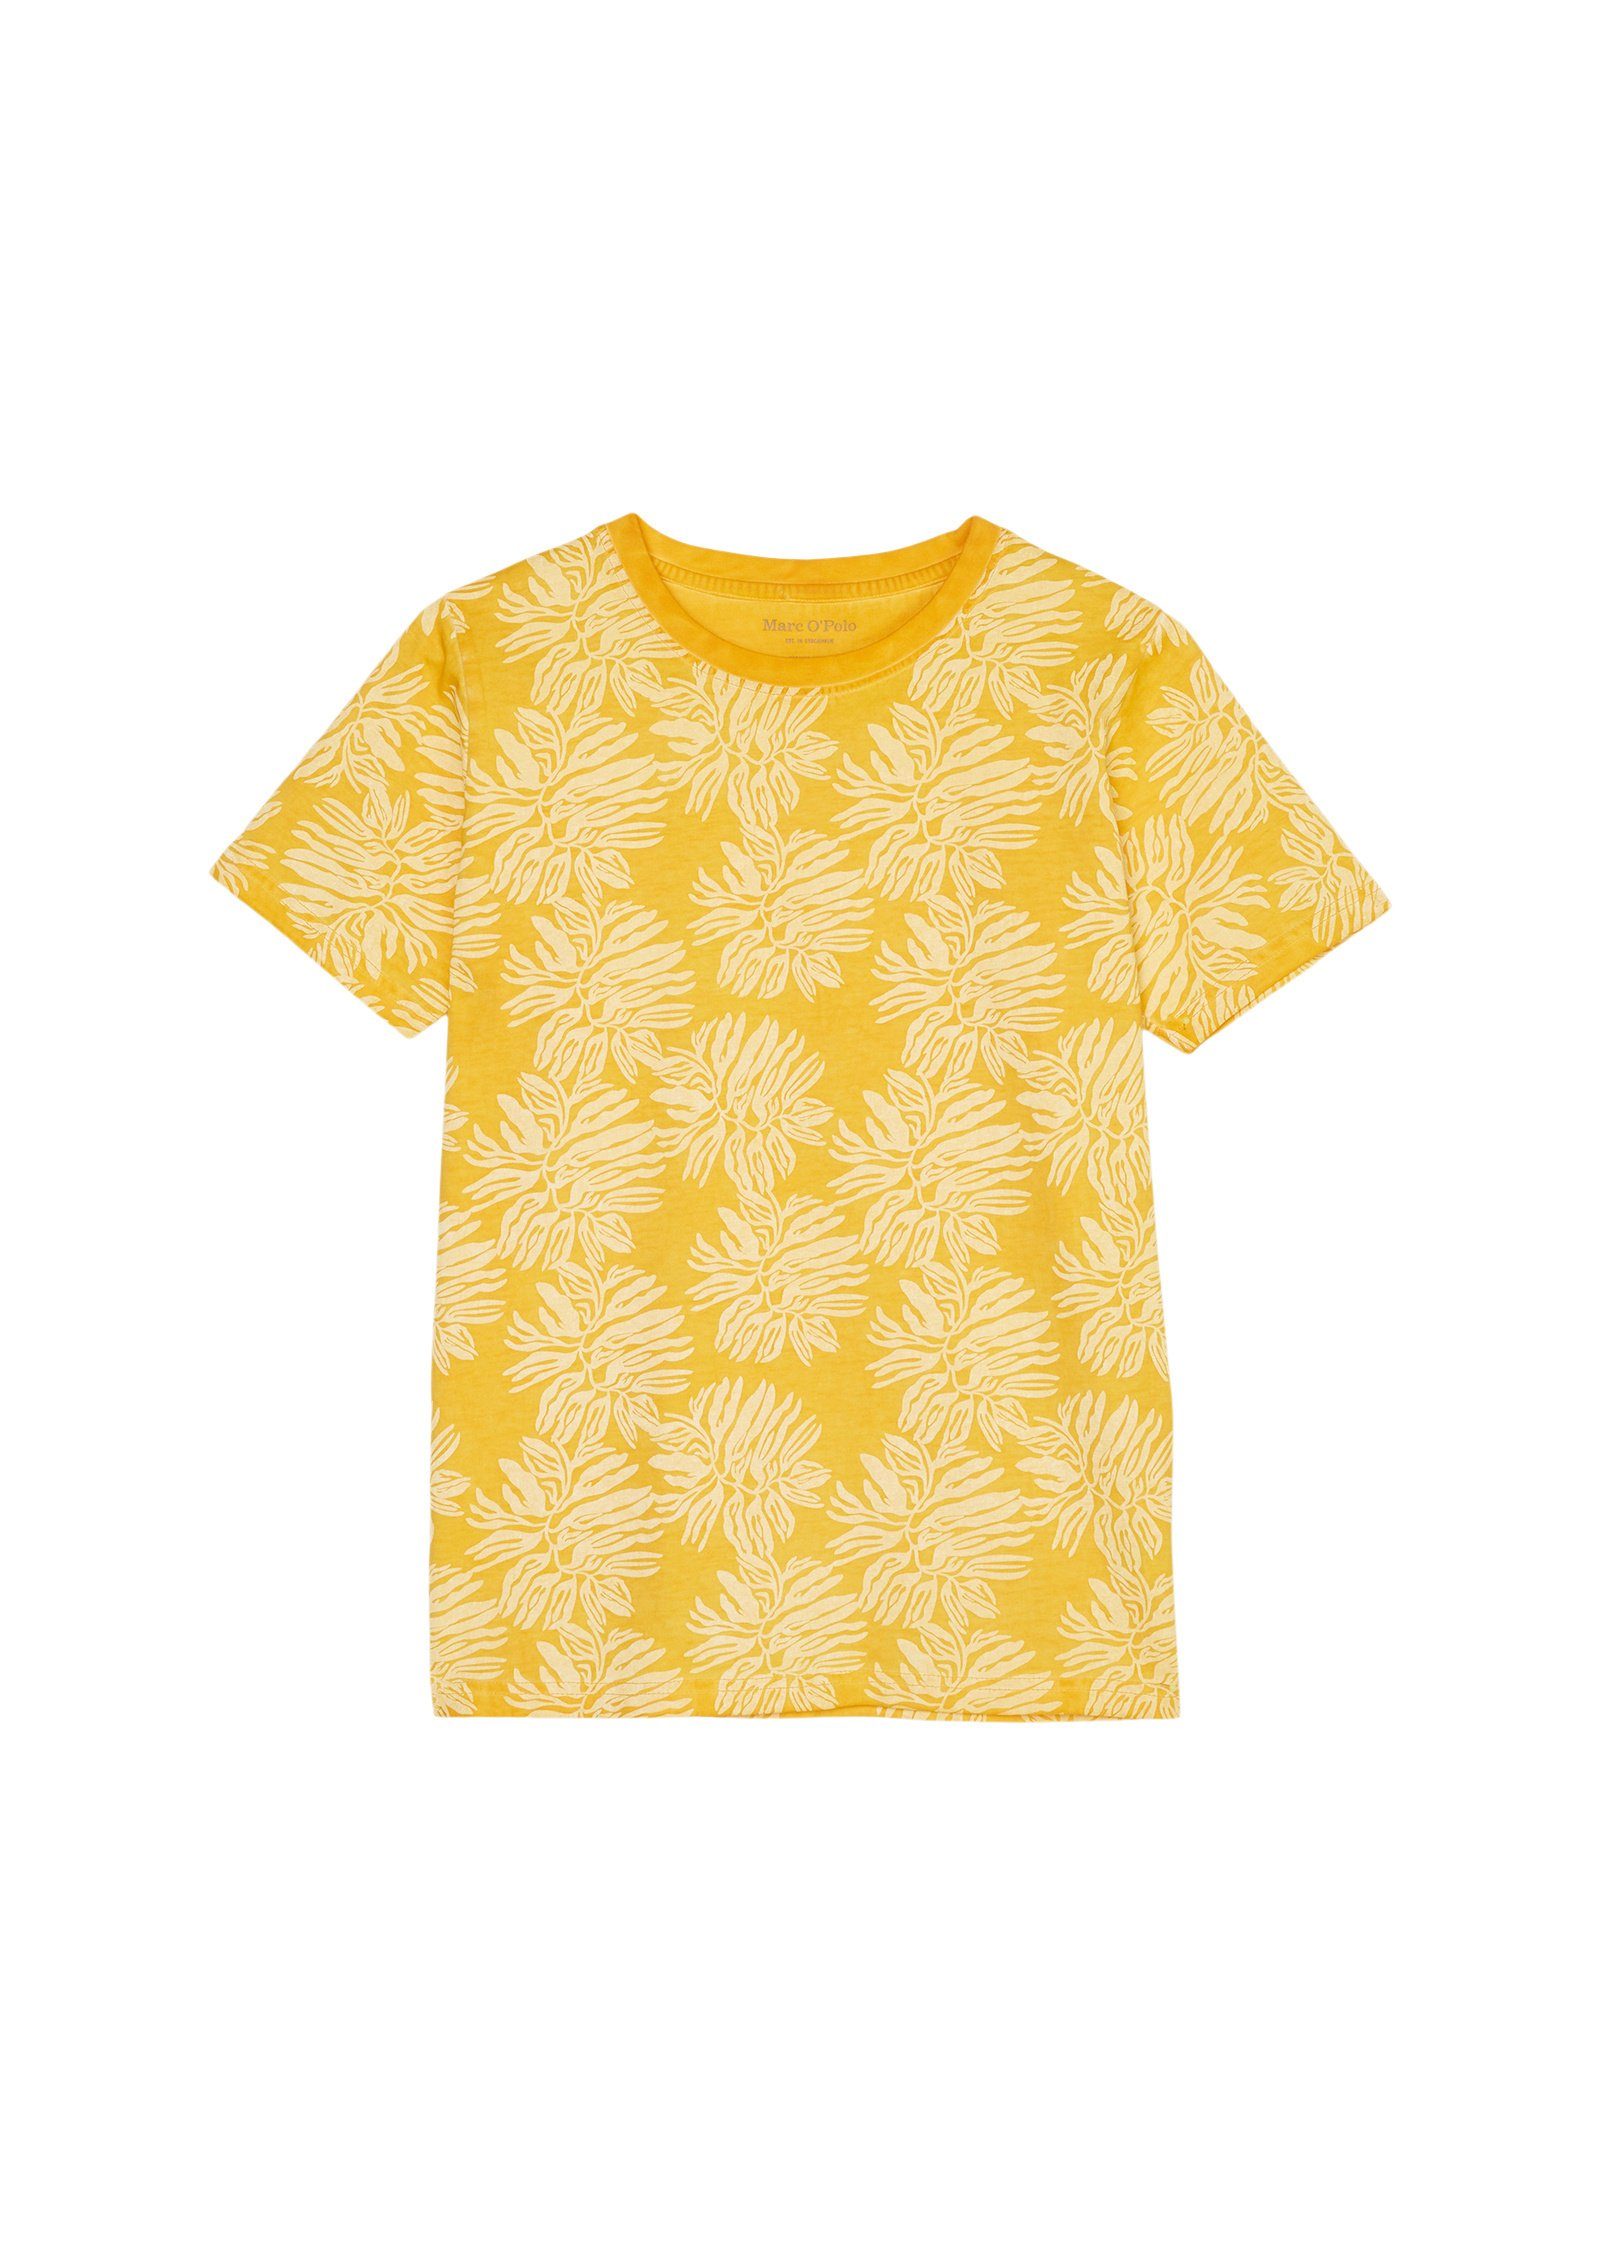 Marc O'Polo T-Shirt mit Pflanzen-Allover-Print gelb